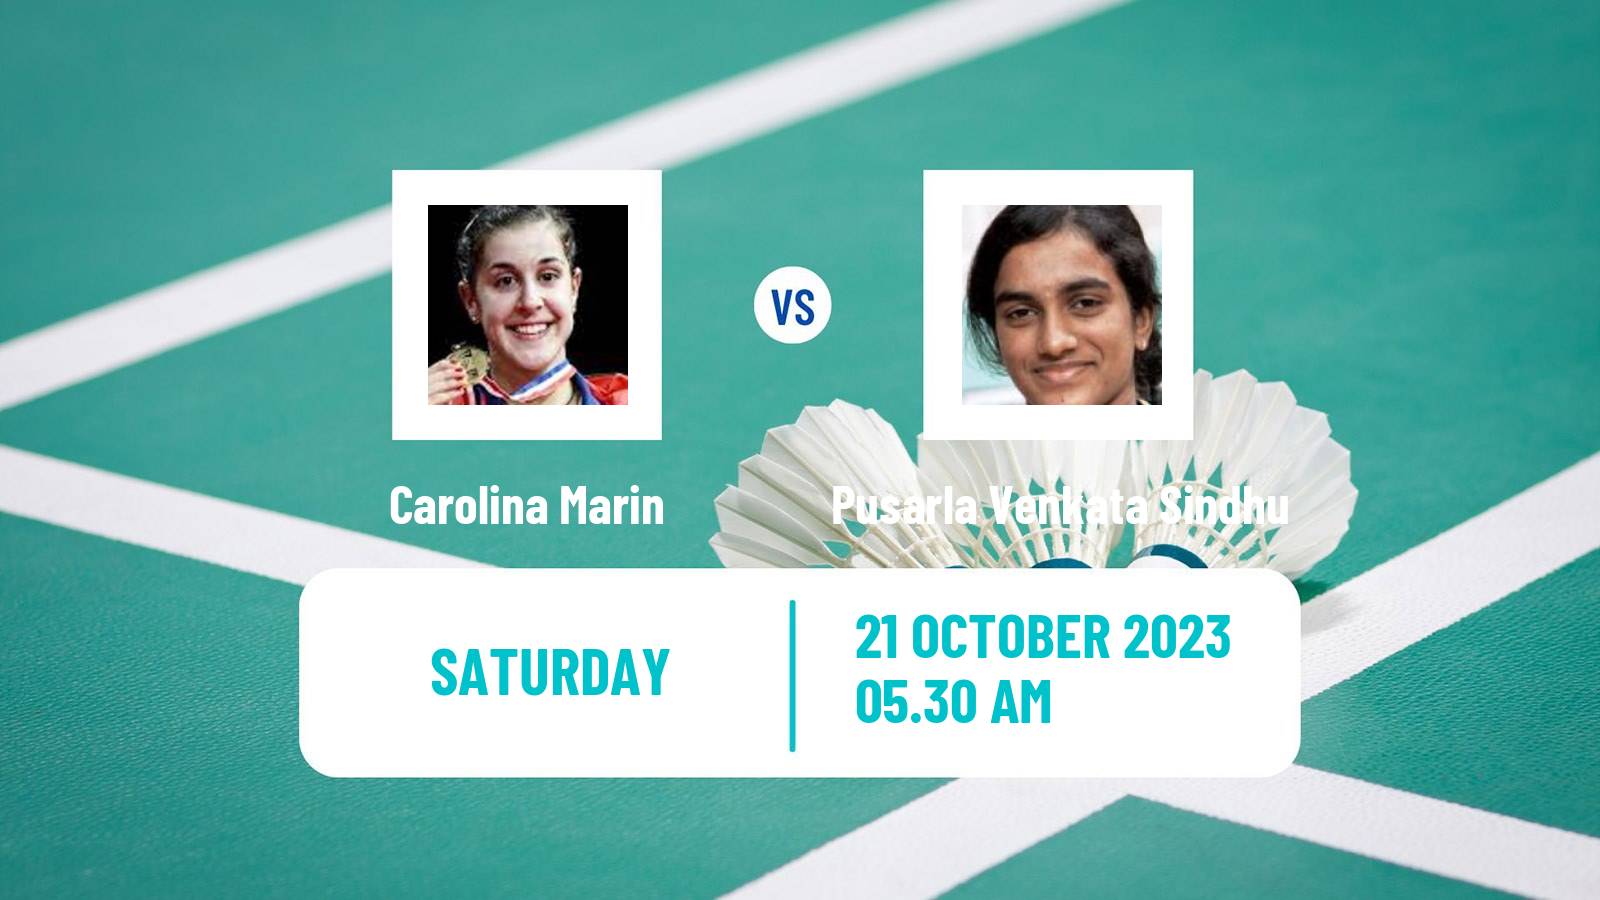 Badminton BWF World Tour Denmark Open Women Carolina Marin - Pusarla Venkata Sindhu